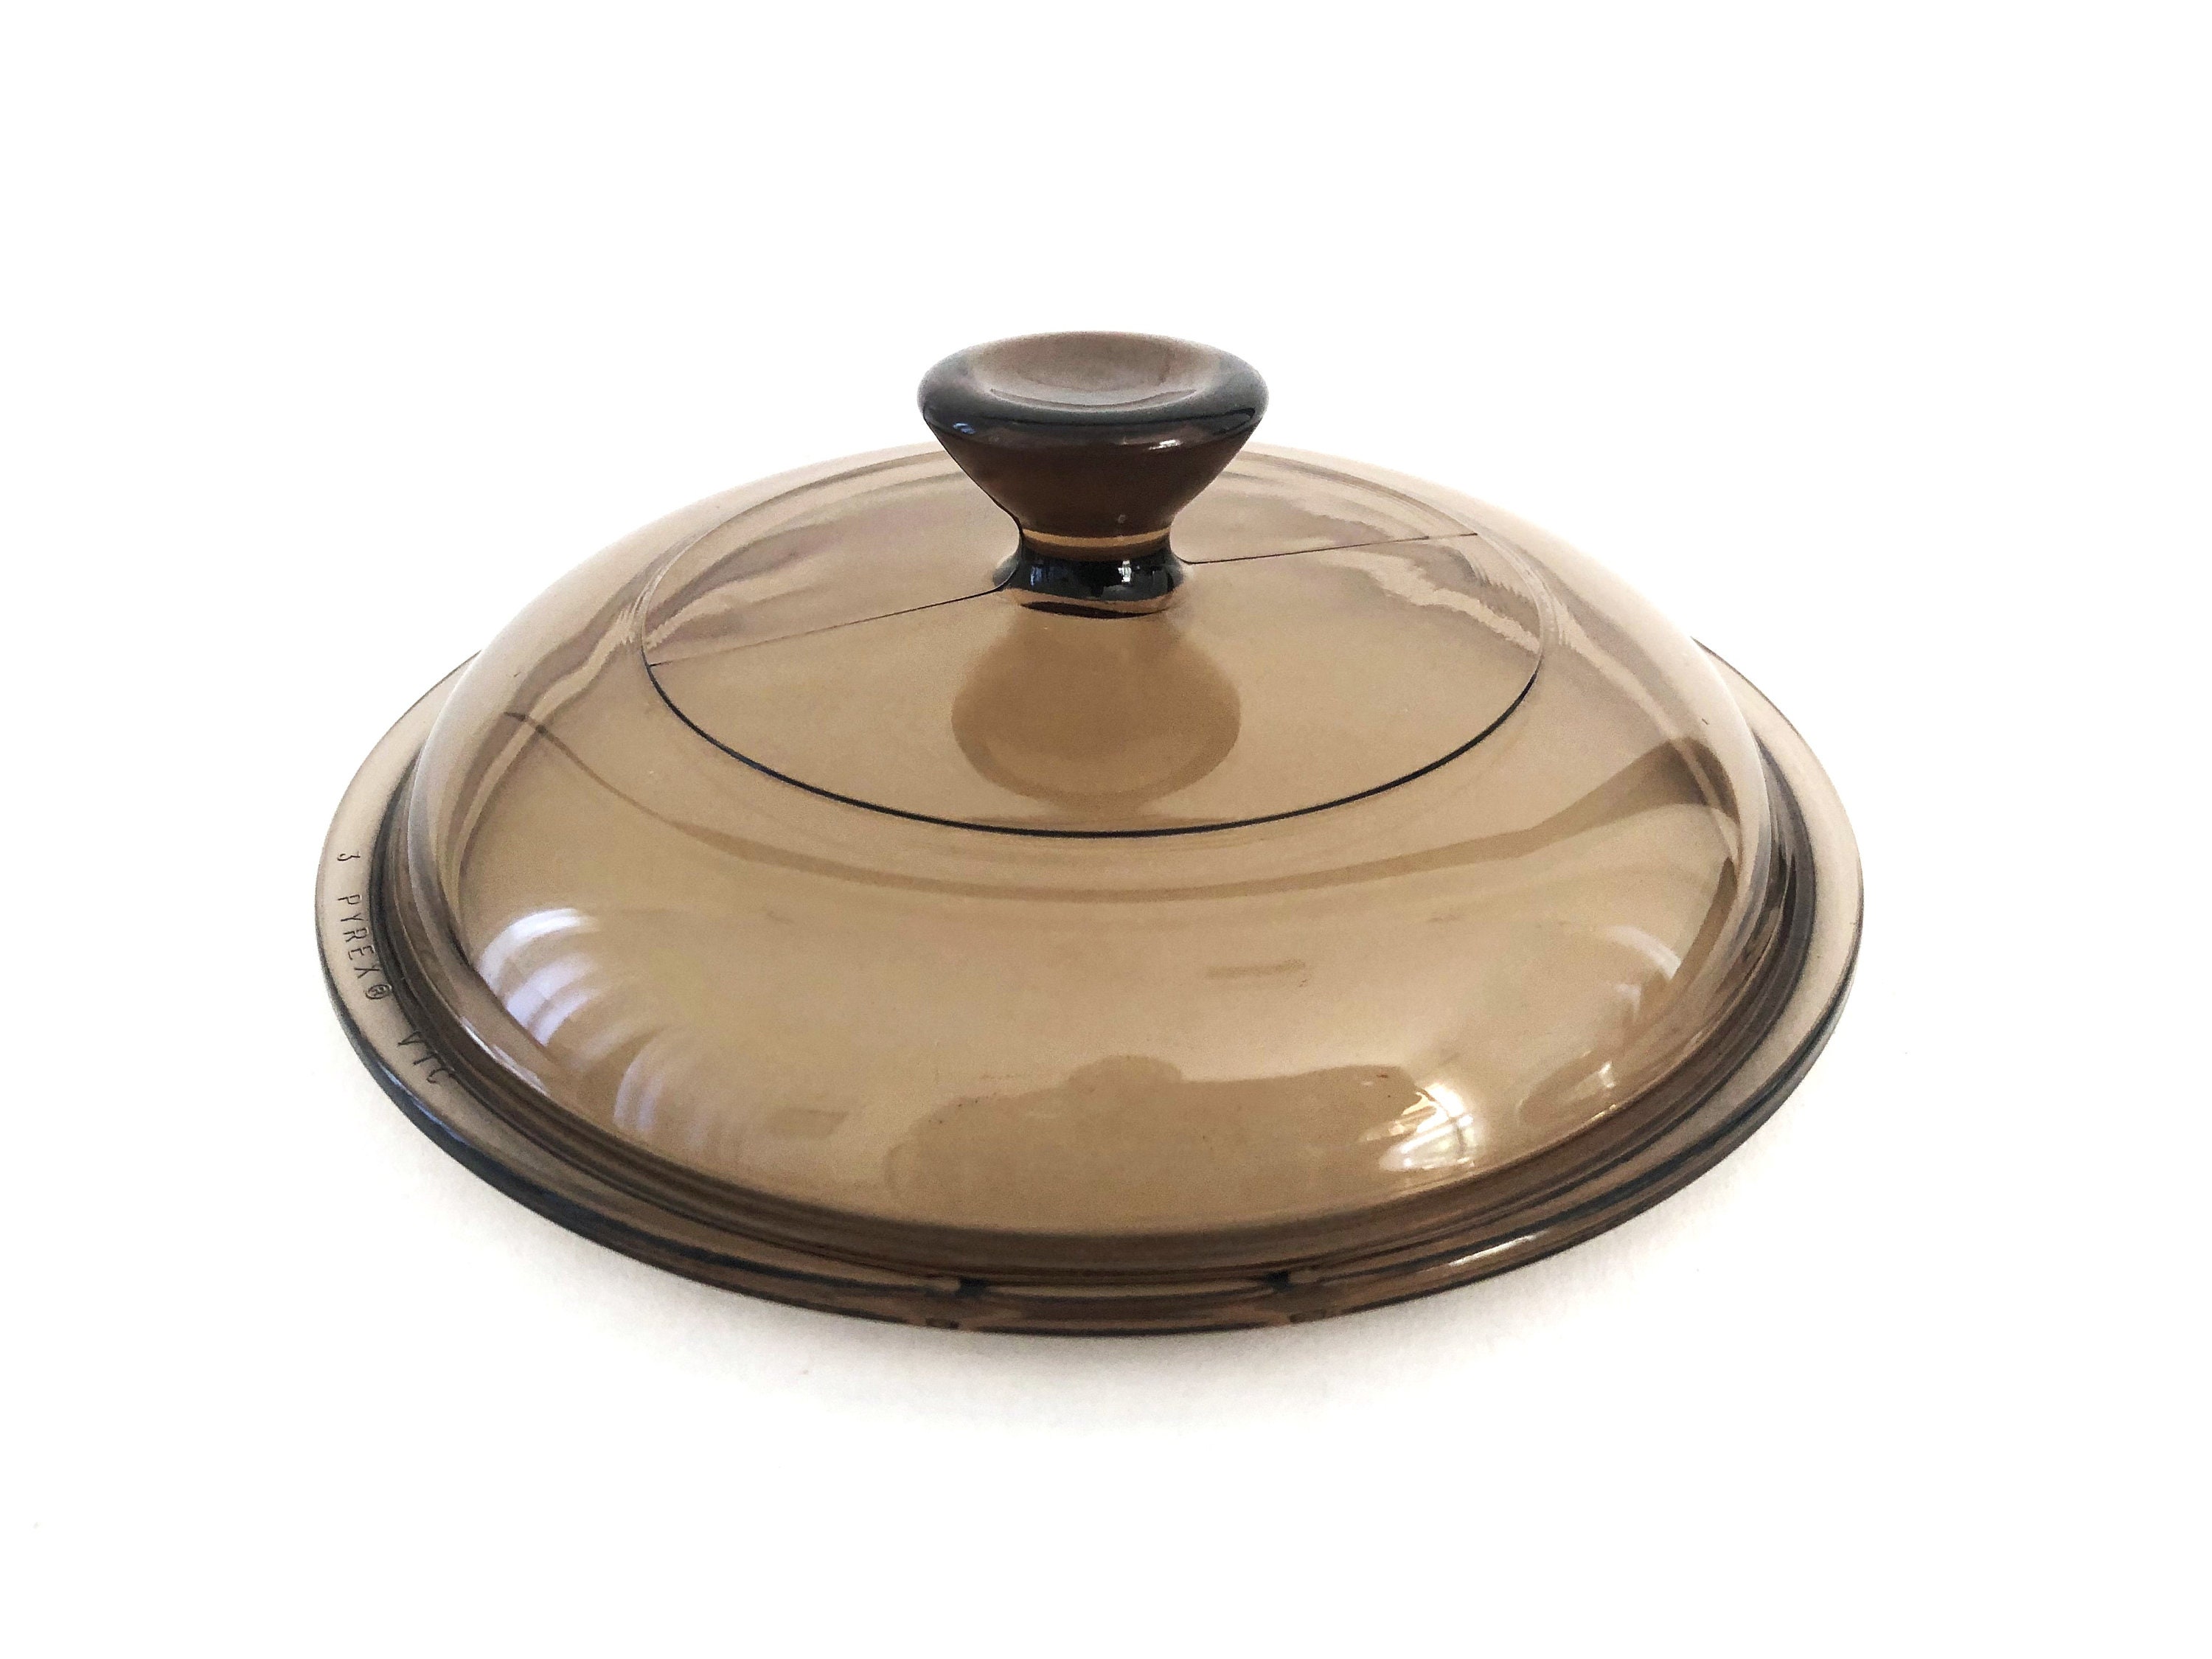 Vintage Vision Ware Amber Glass Double Boiler Saucepan Pots & 